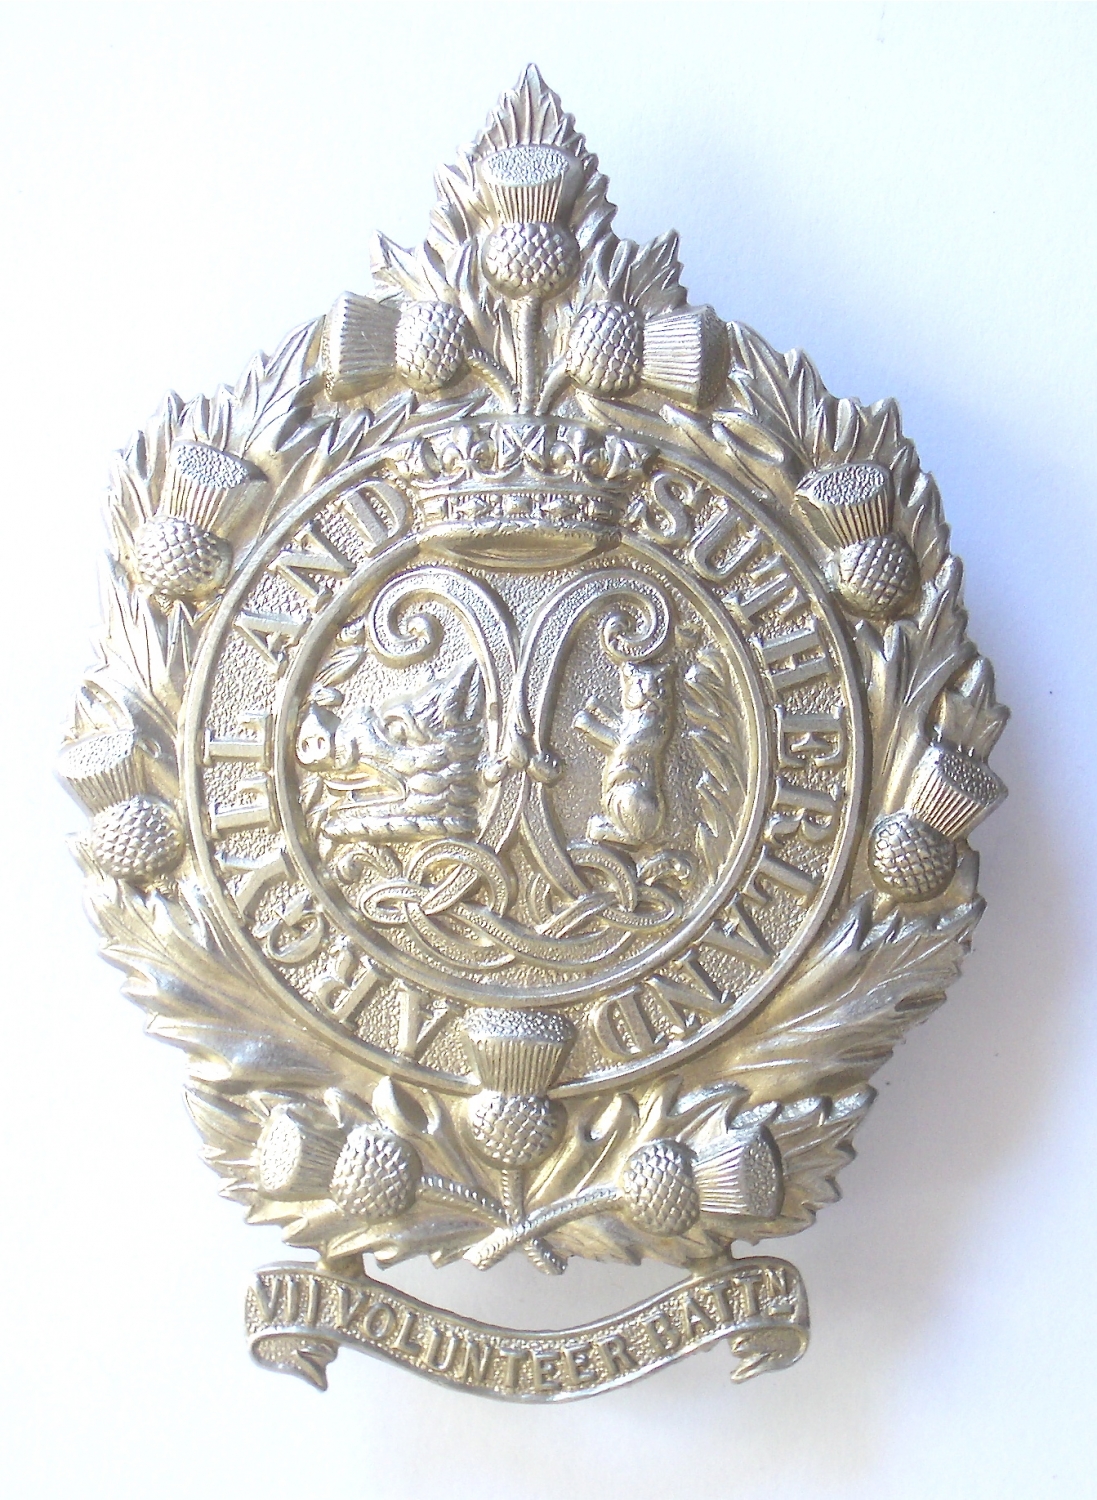 7th VB Argyll & Sutherland glengarry badge